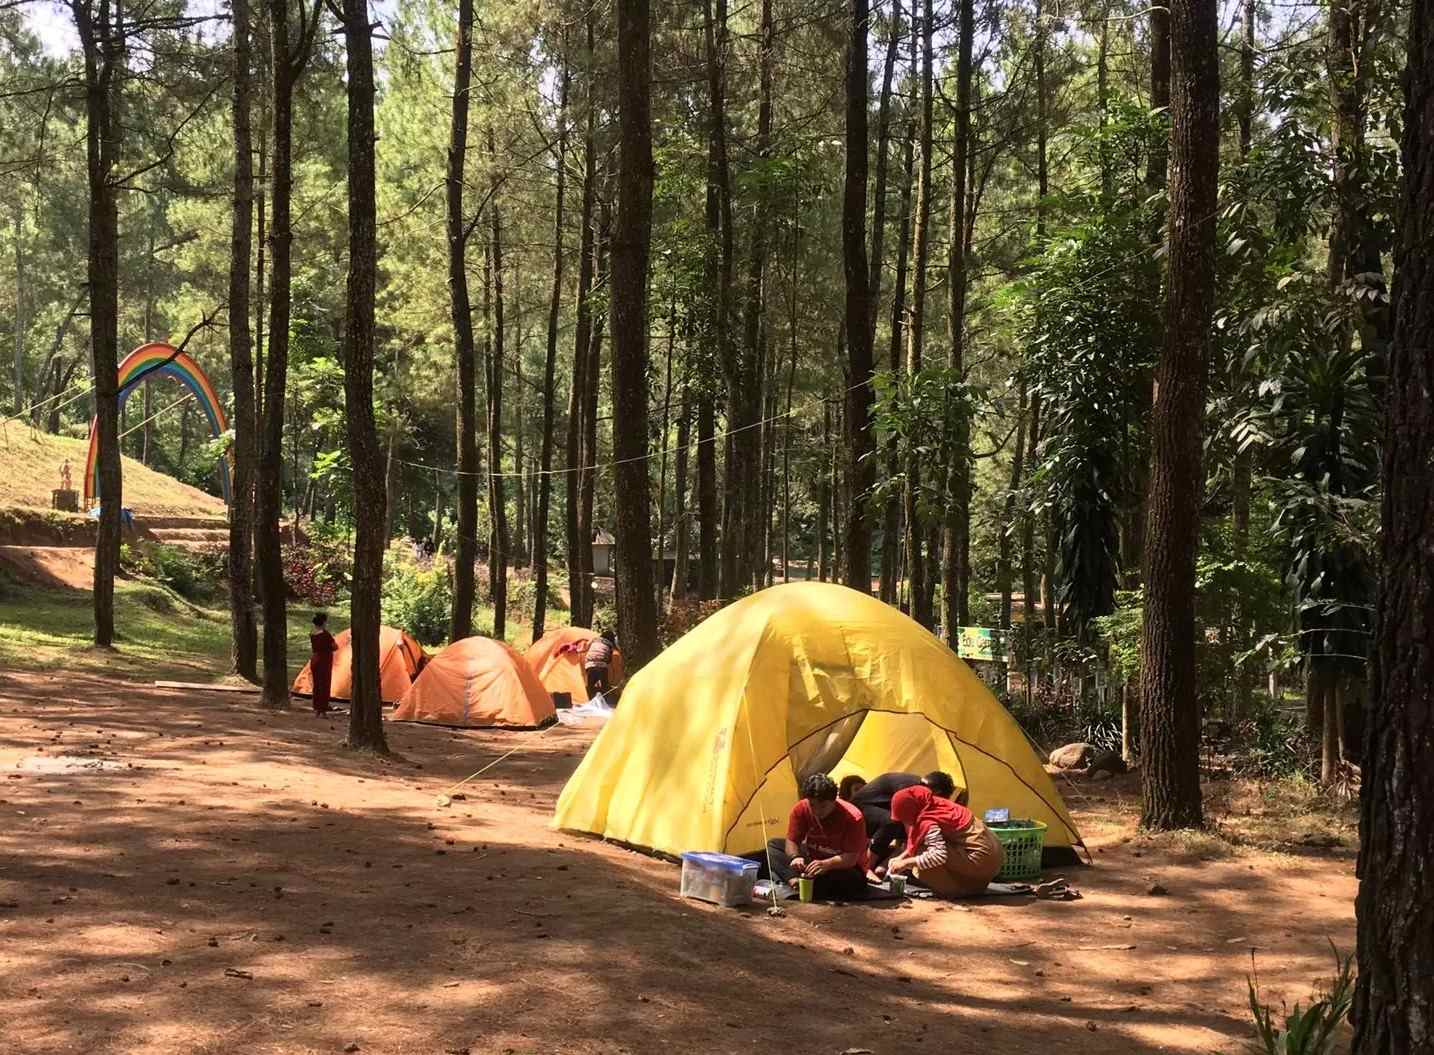 Tempat camping di Malang